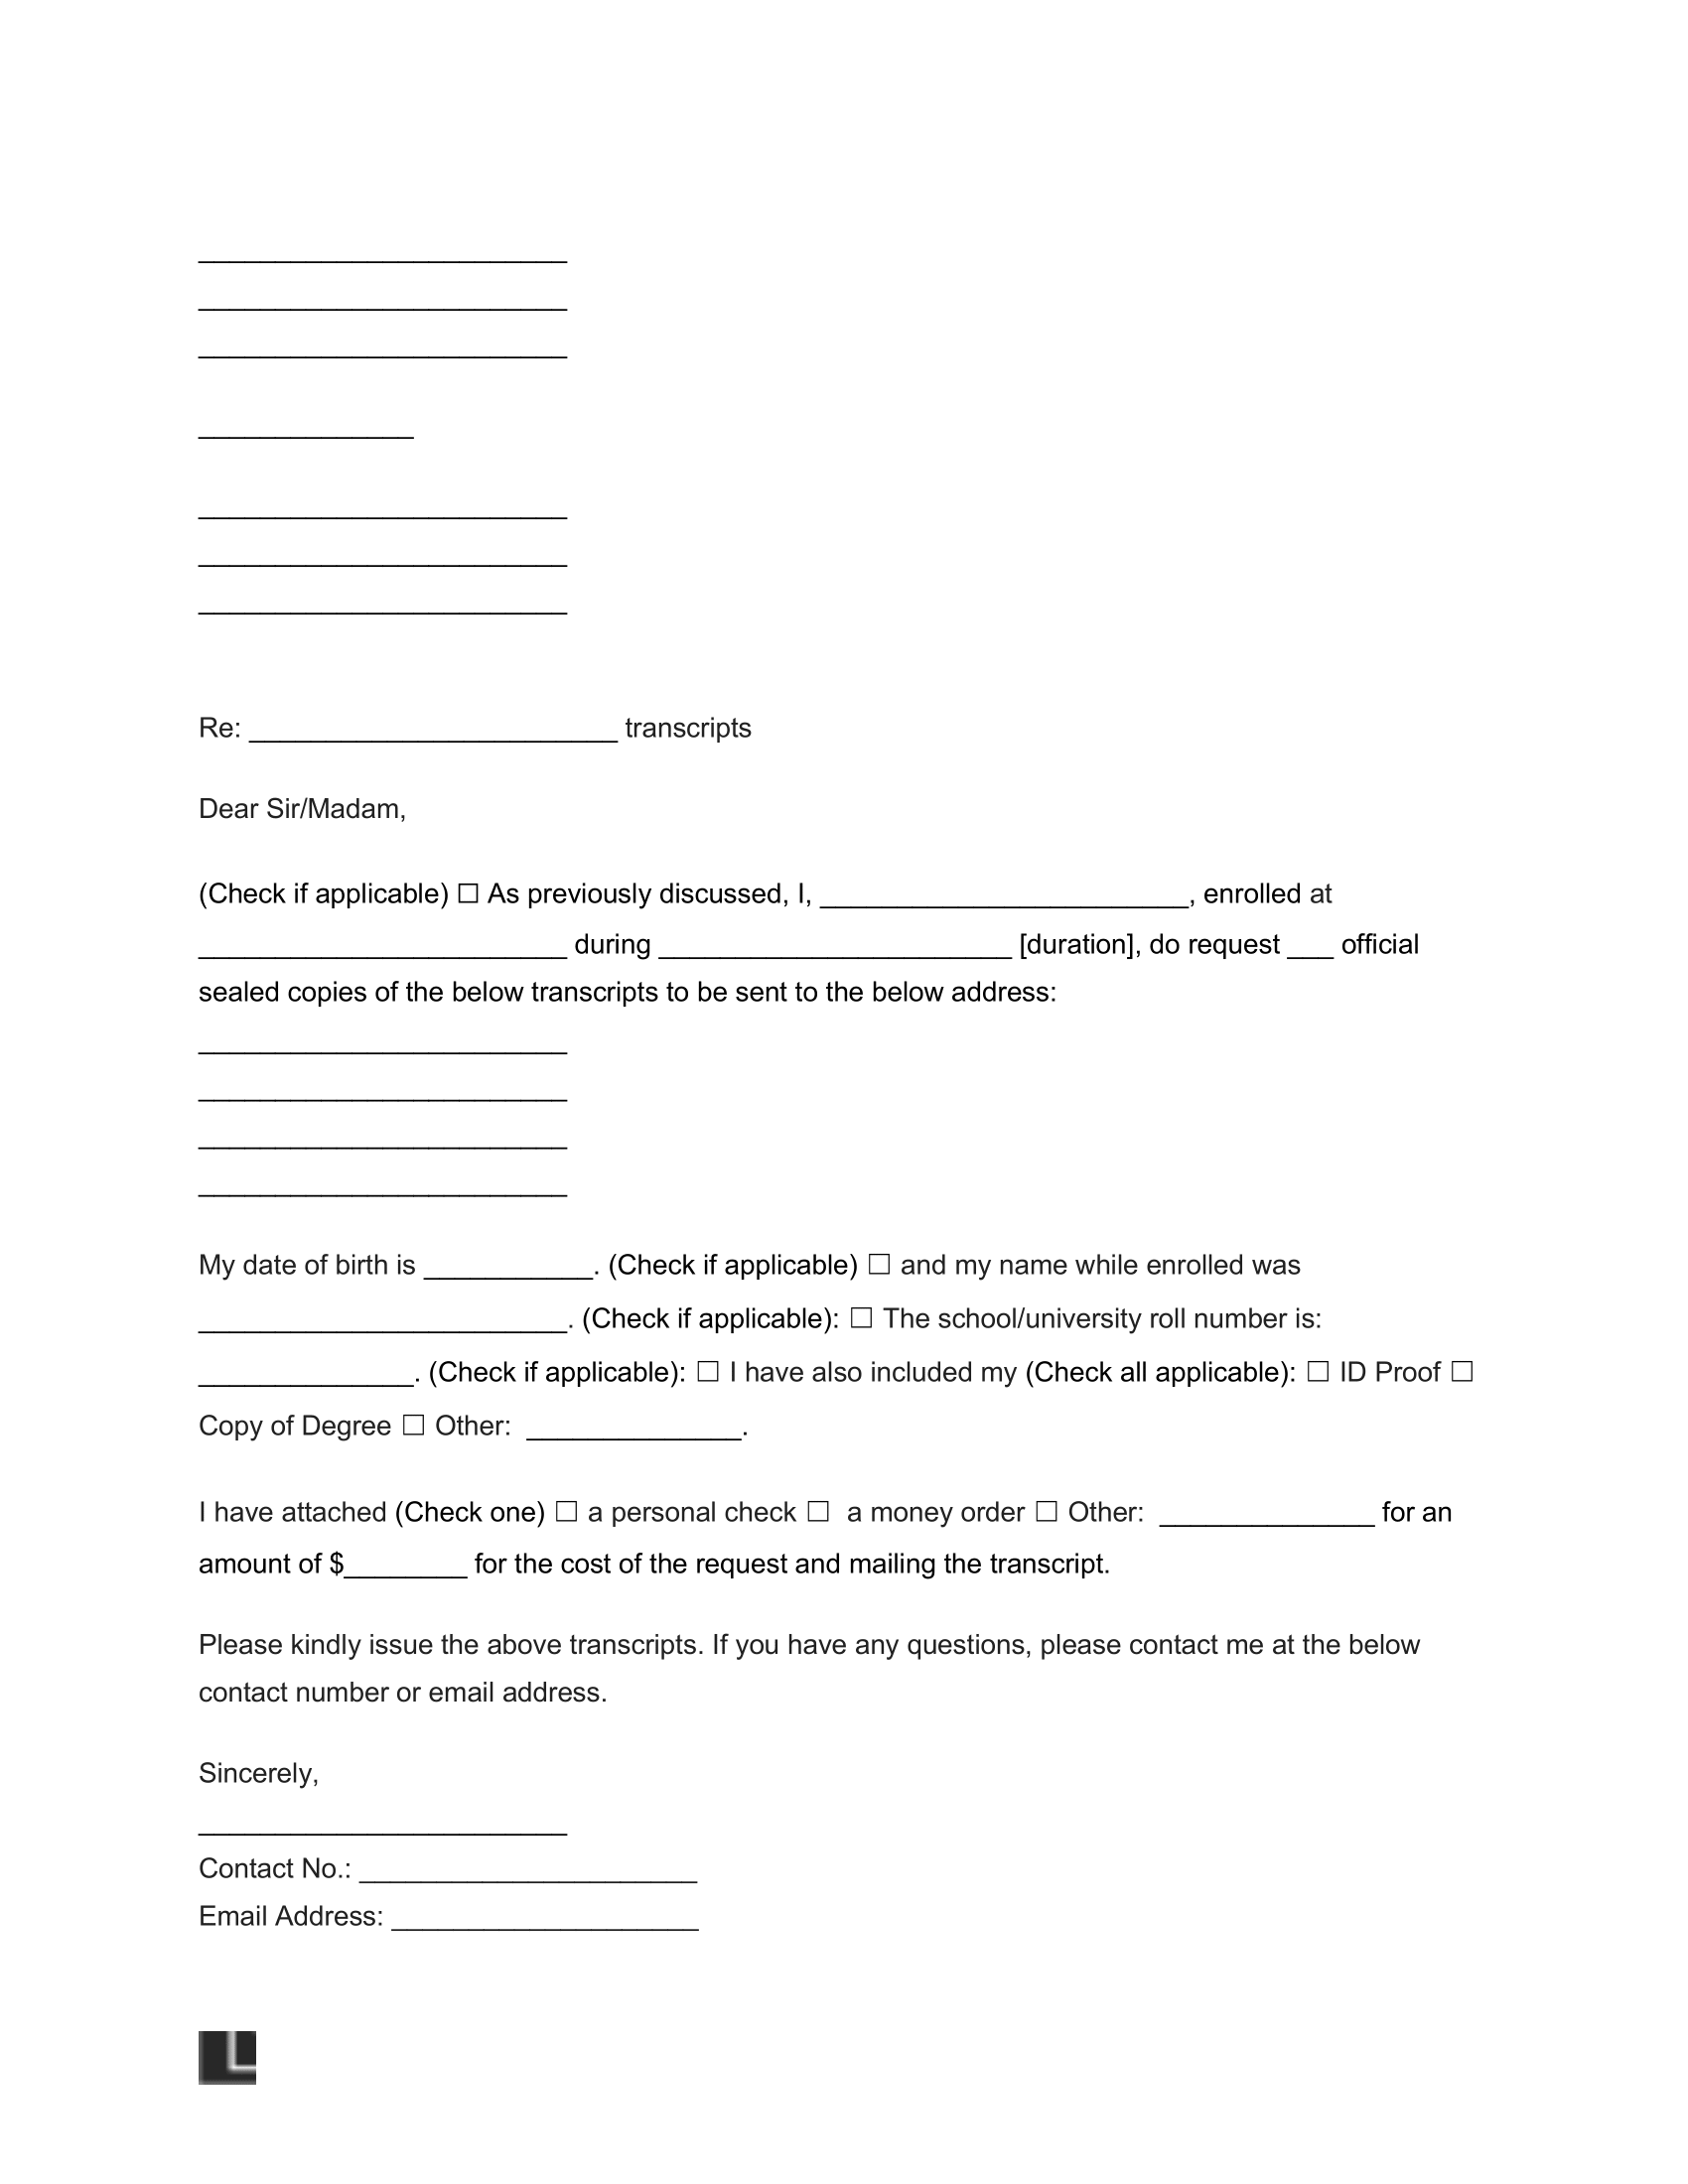 free-transcript-request-form-pdf-word